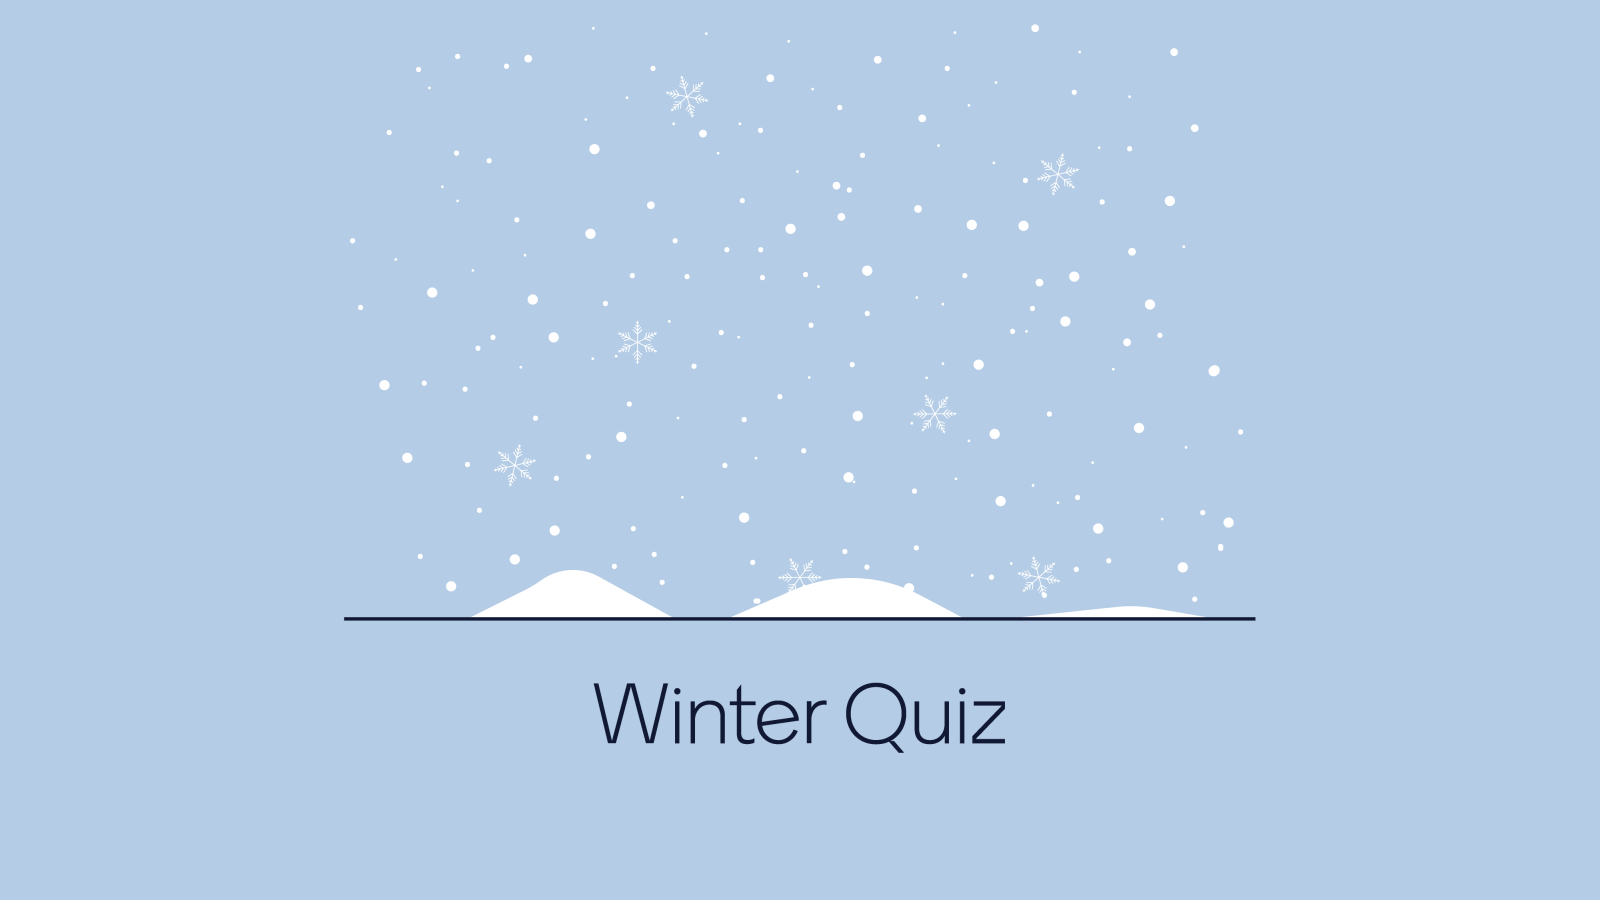 Winter Quiz